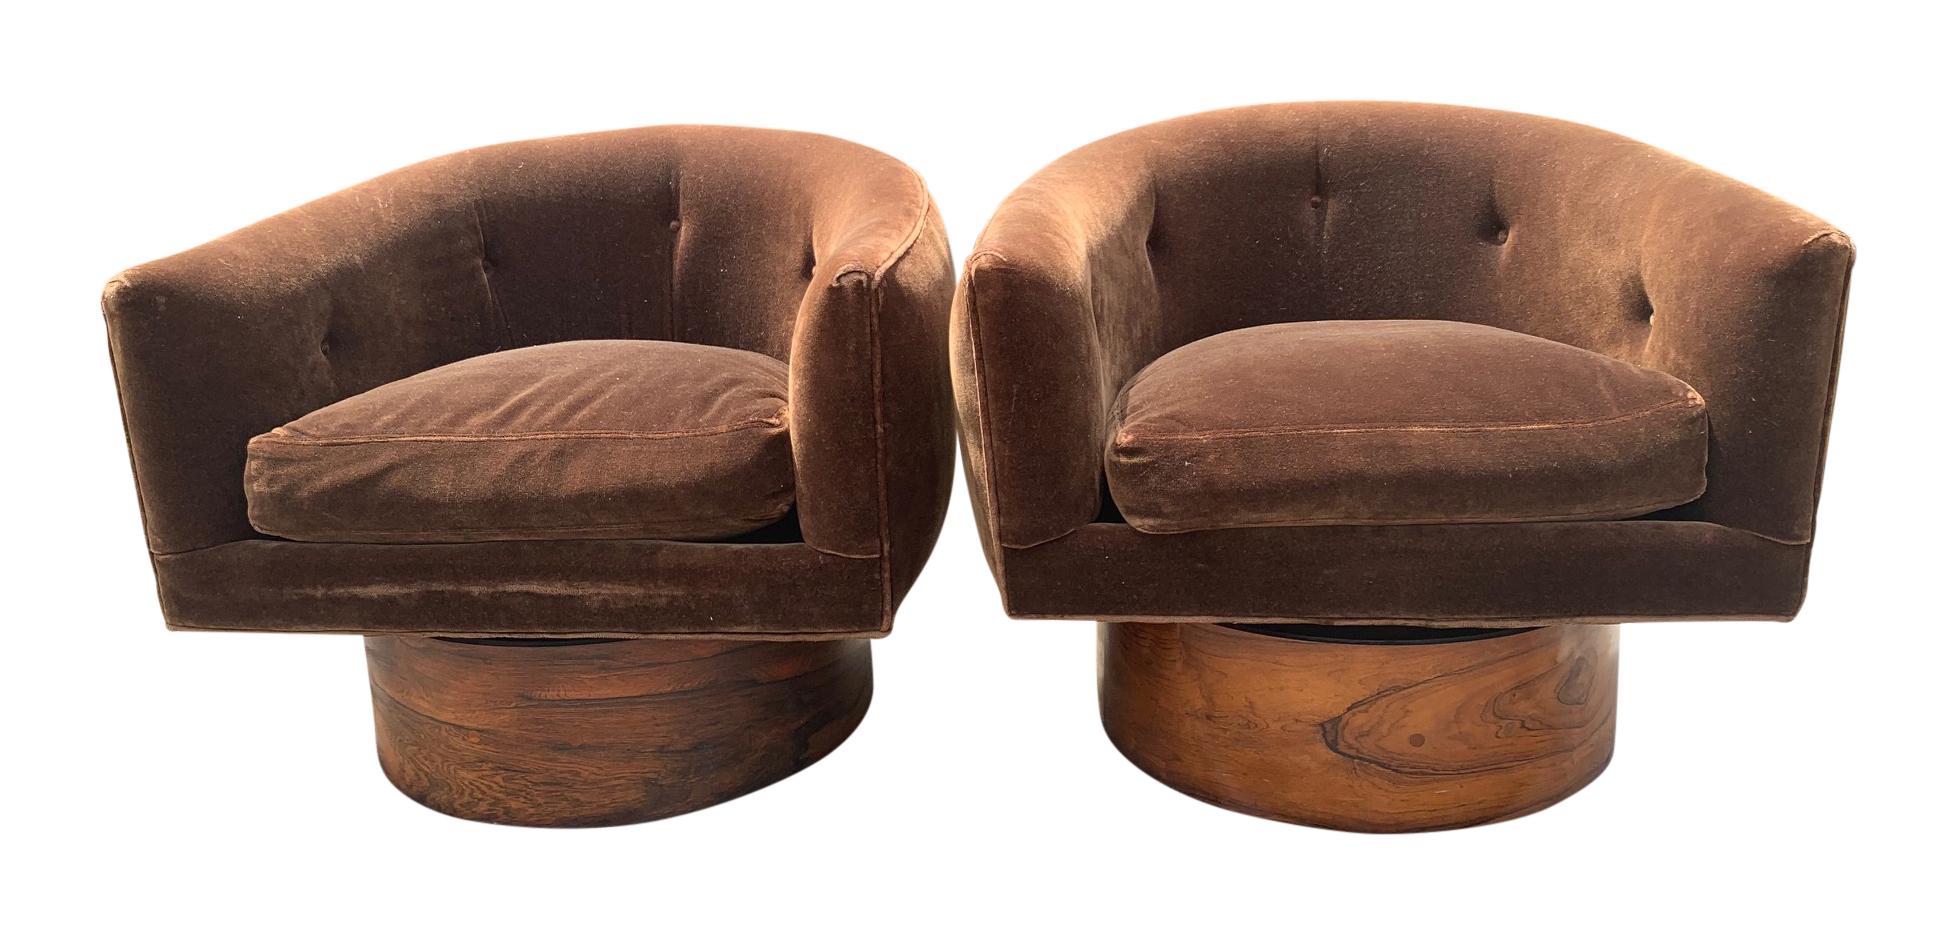 Pair of Milo Baughman for Thayer Coggin Swivel chairs, wood base, Mid-Century Modern.